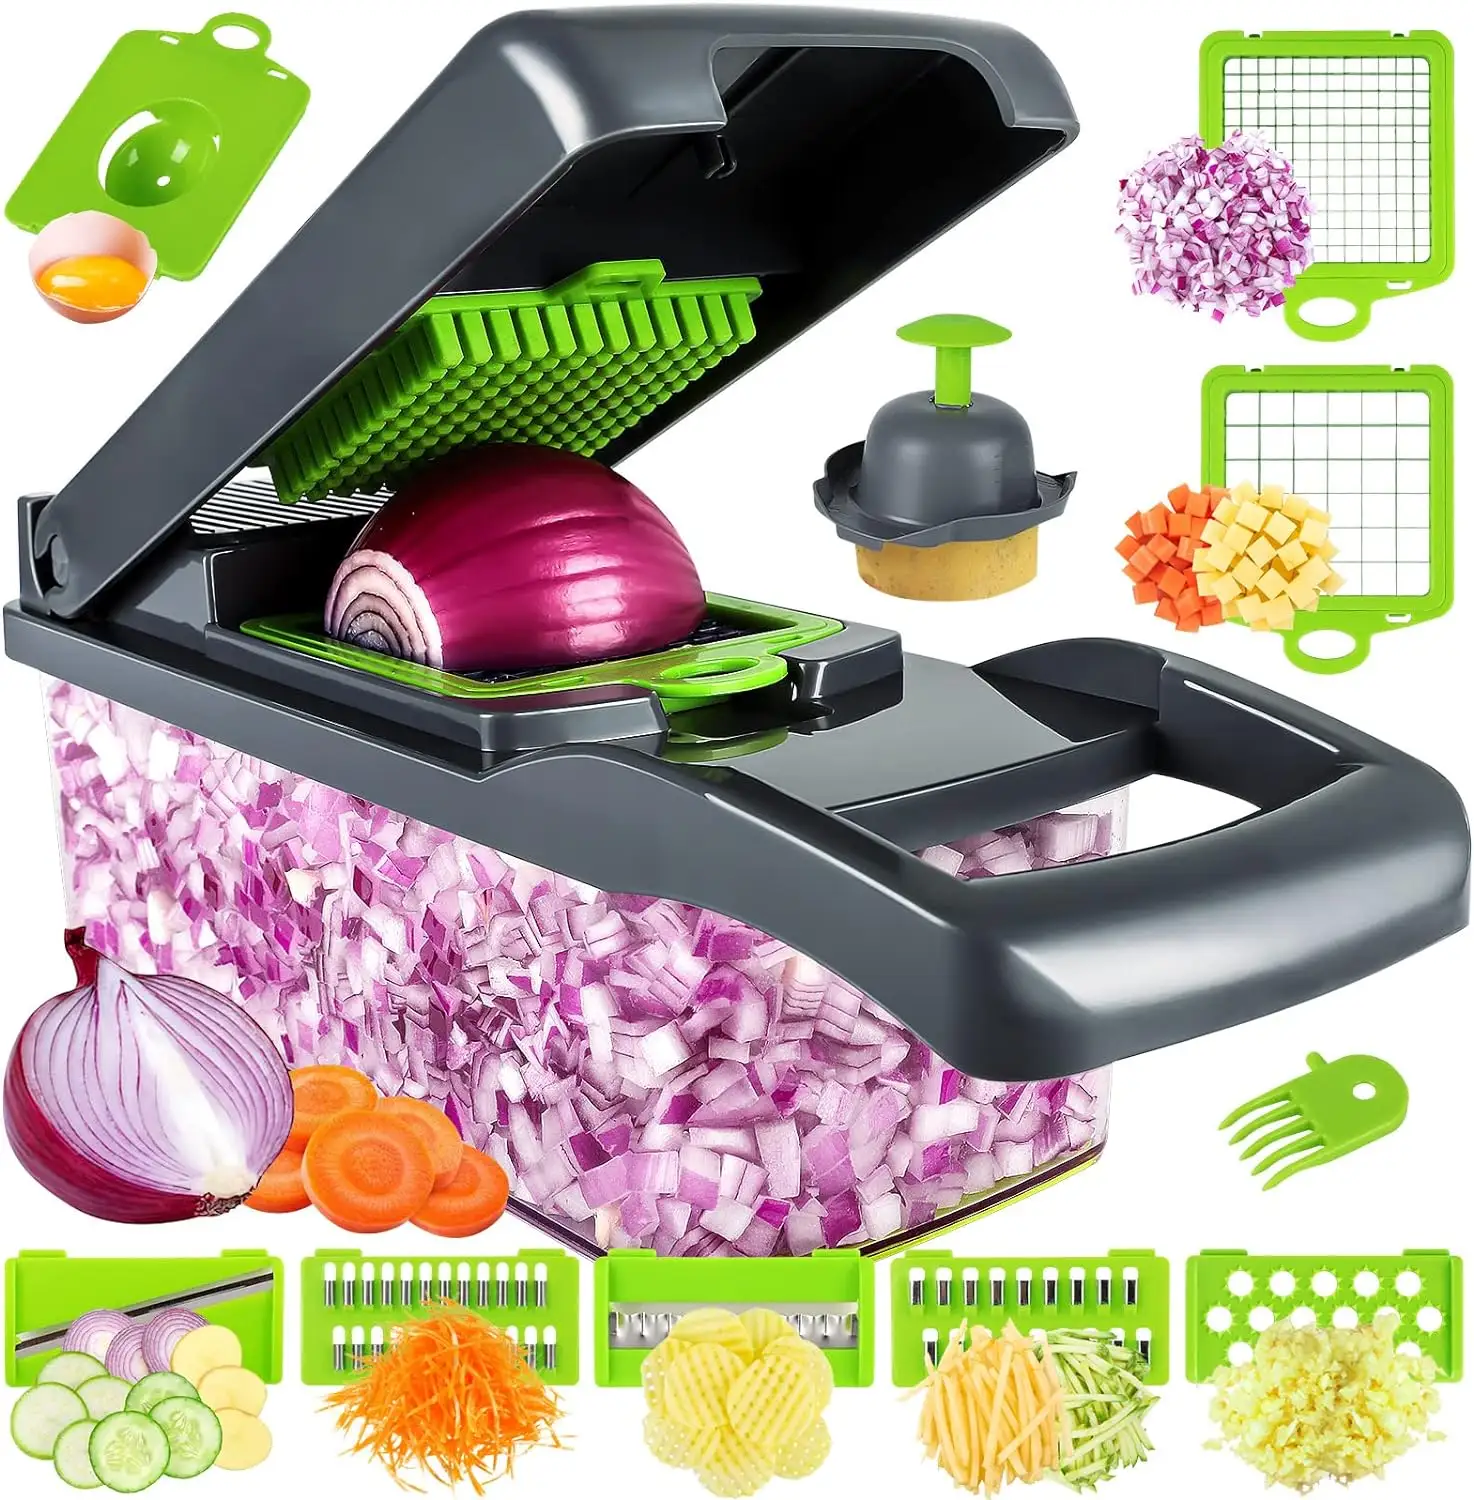 SuXiu OEM قطاعة خضروات متعددة الوظائف وتصريف ميجيك دوارة للاستخدام في المطبخ تحفة رائدة في كفاءة المطبخ